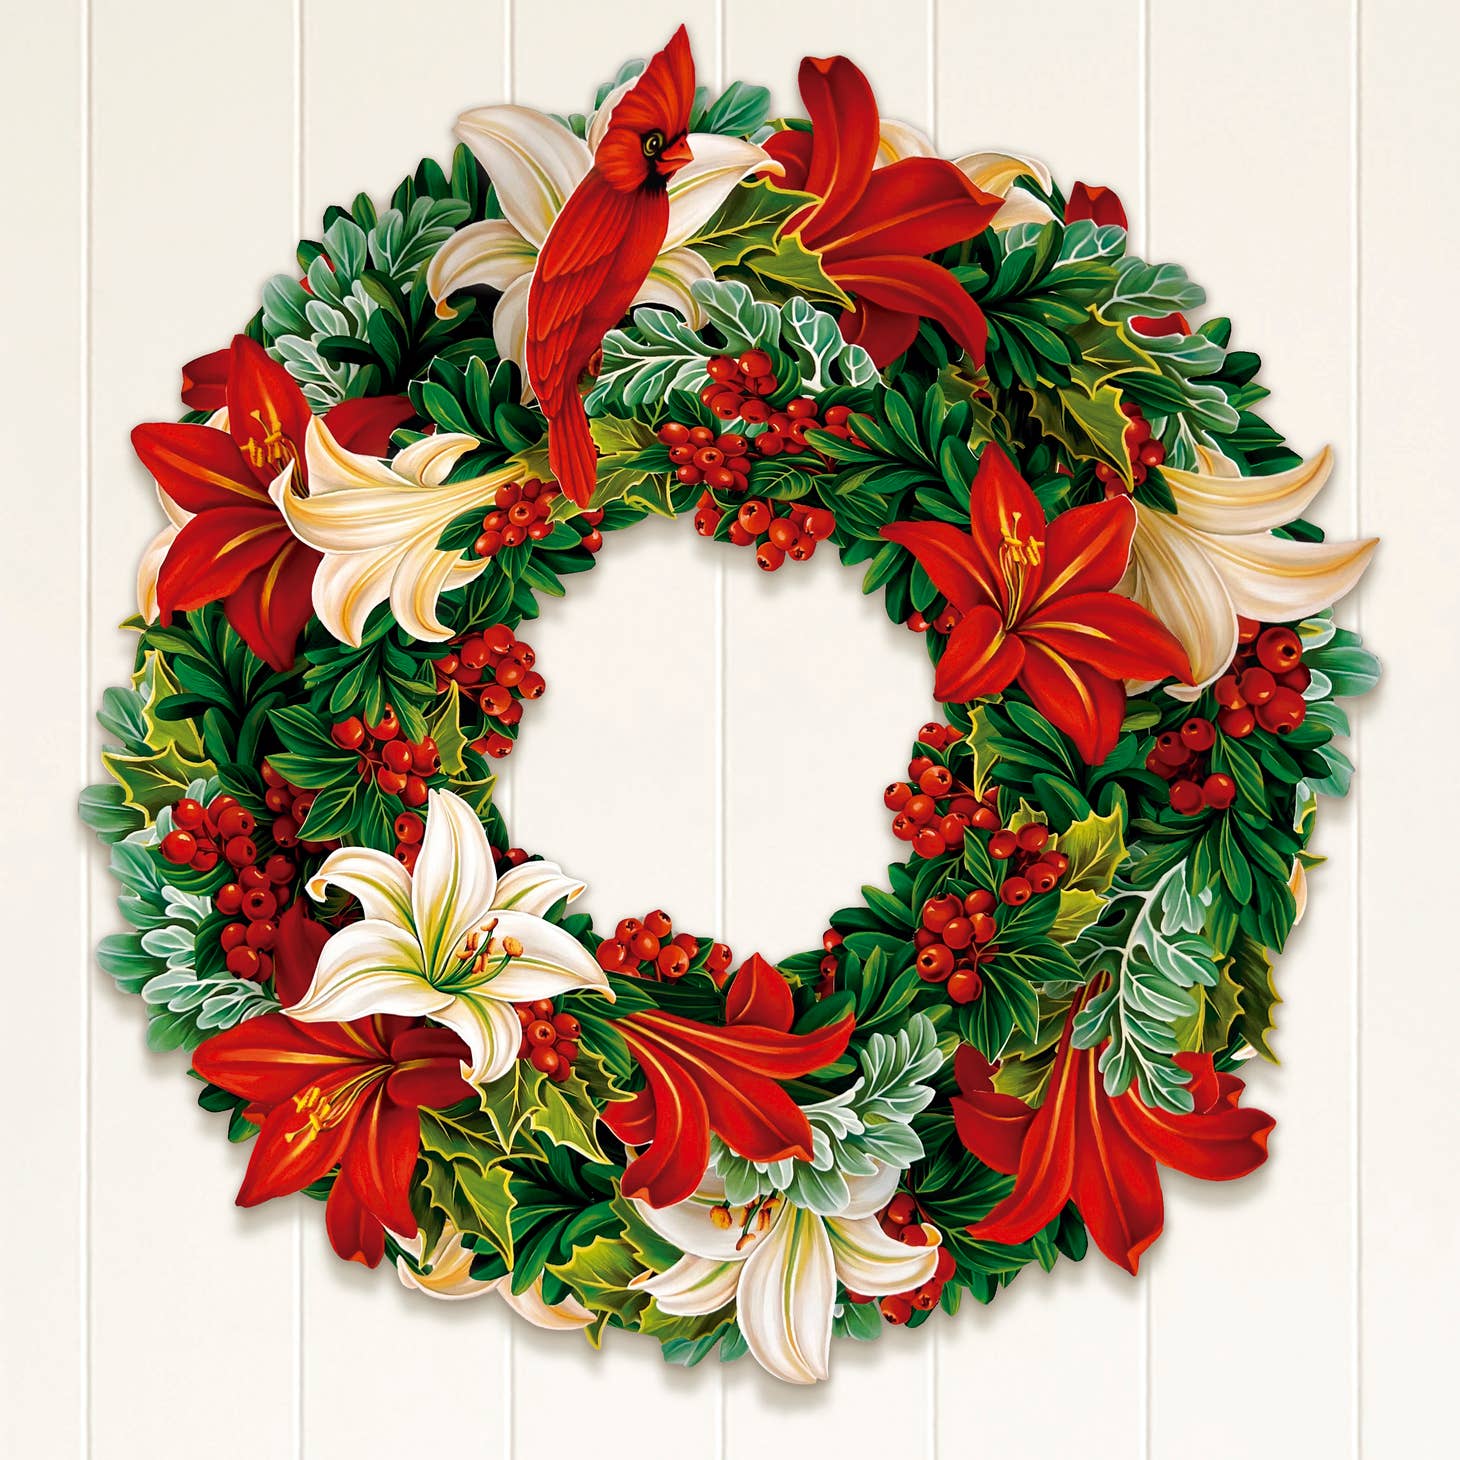 Winter Joy Wreath Pop Up Card